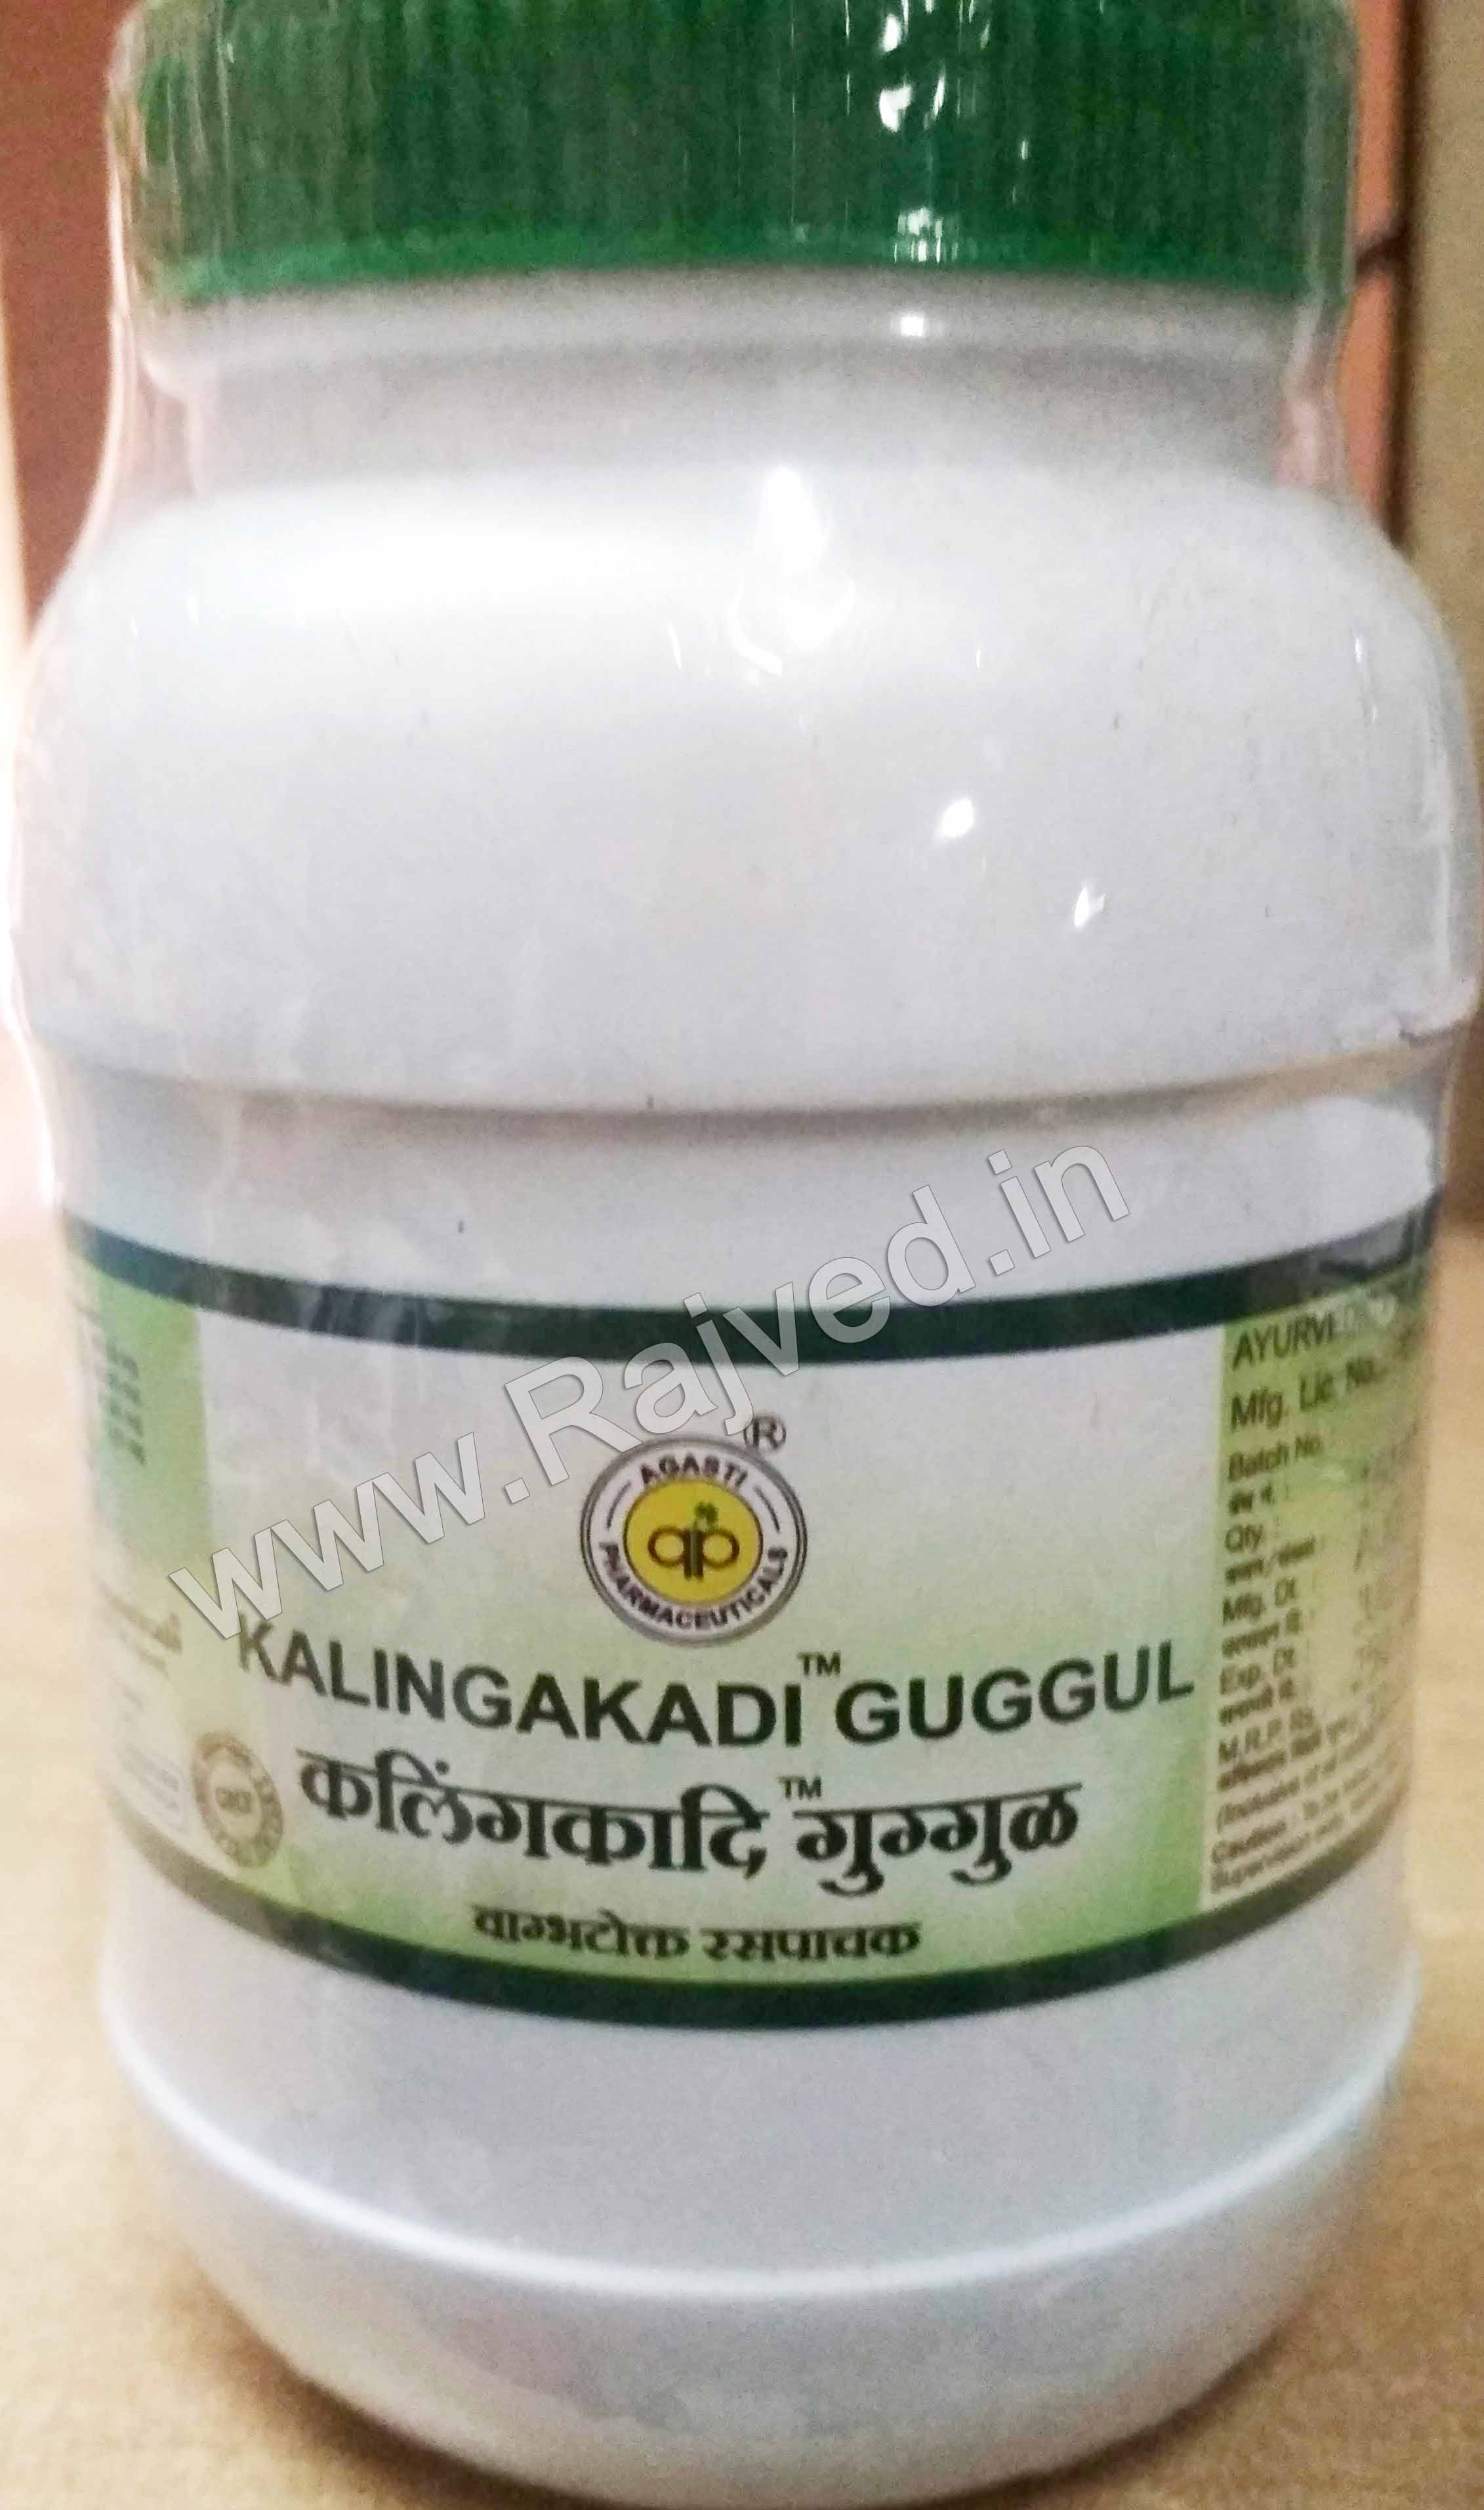 kalingakadi guggul raspachak 500 gm 2000 tablet upto 15% off agasti pharmaceuticals